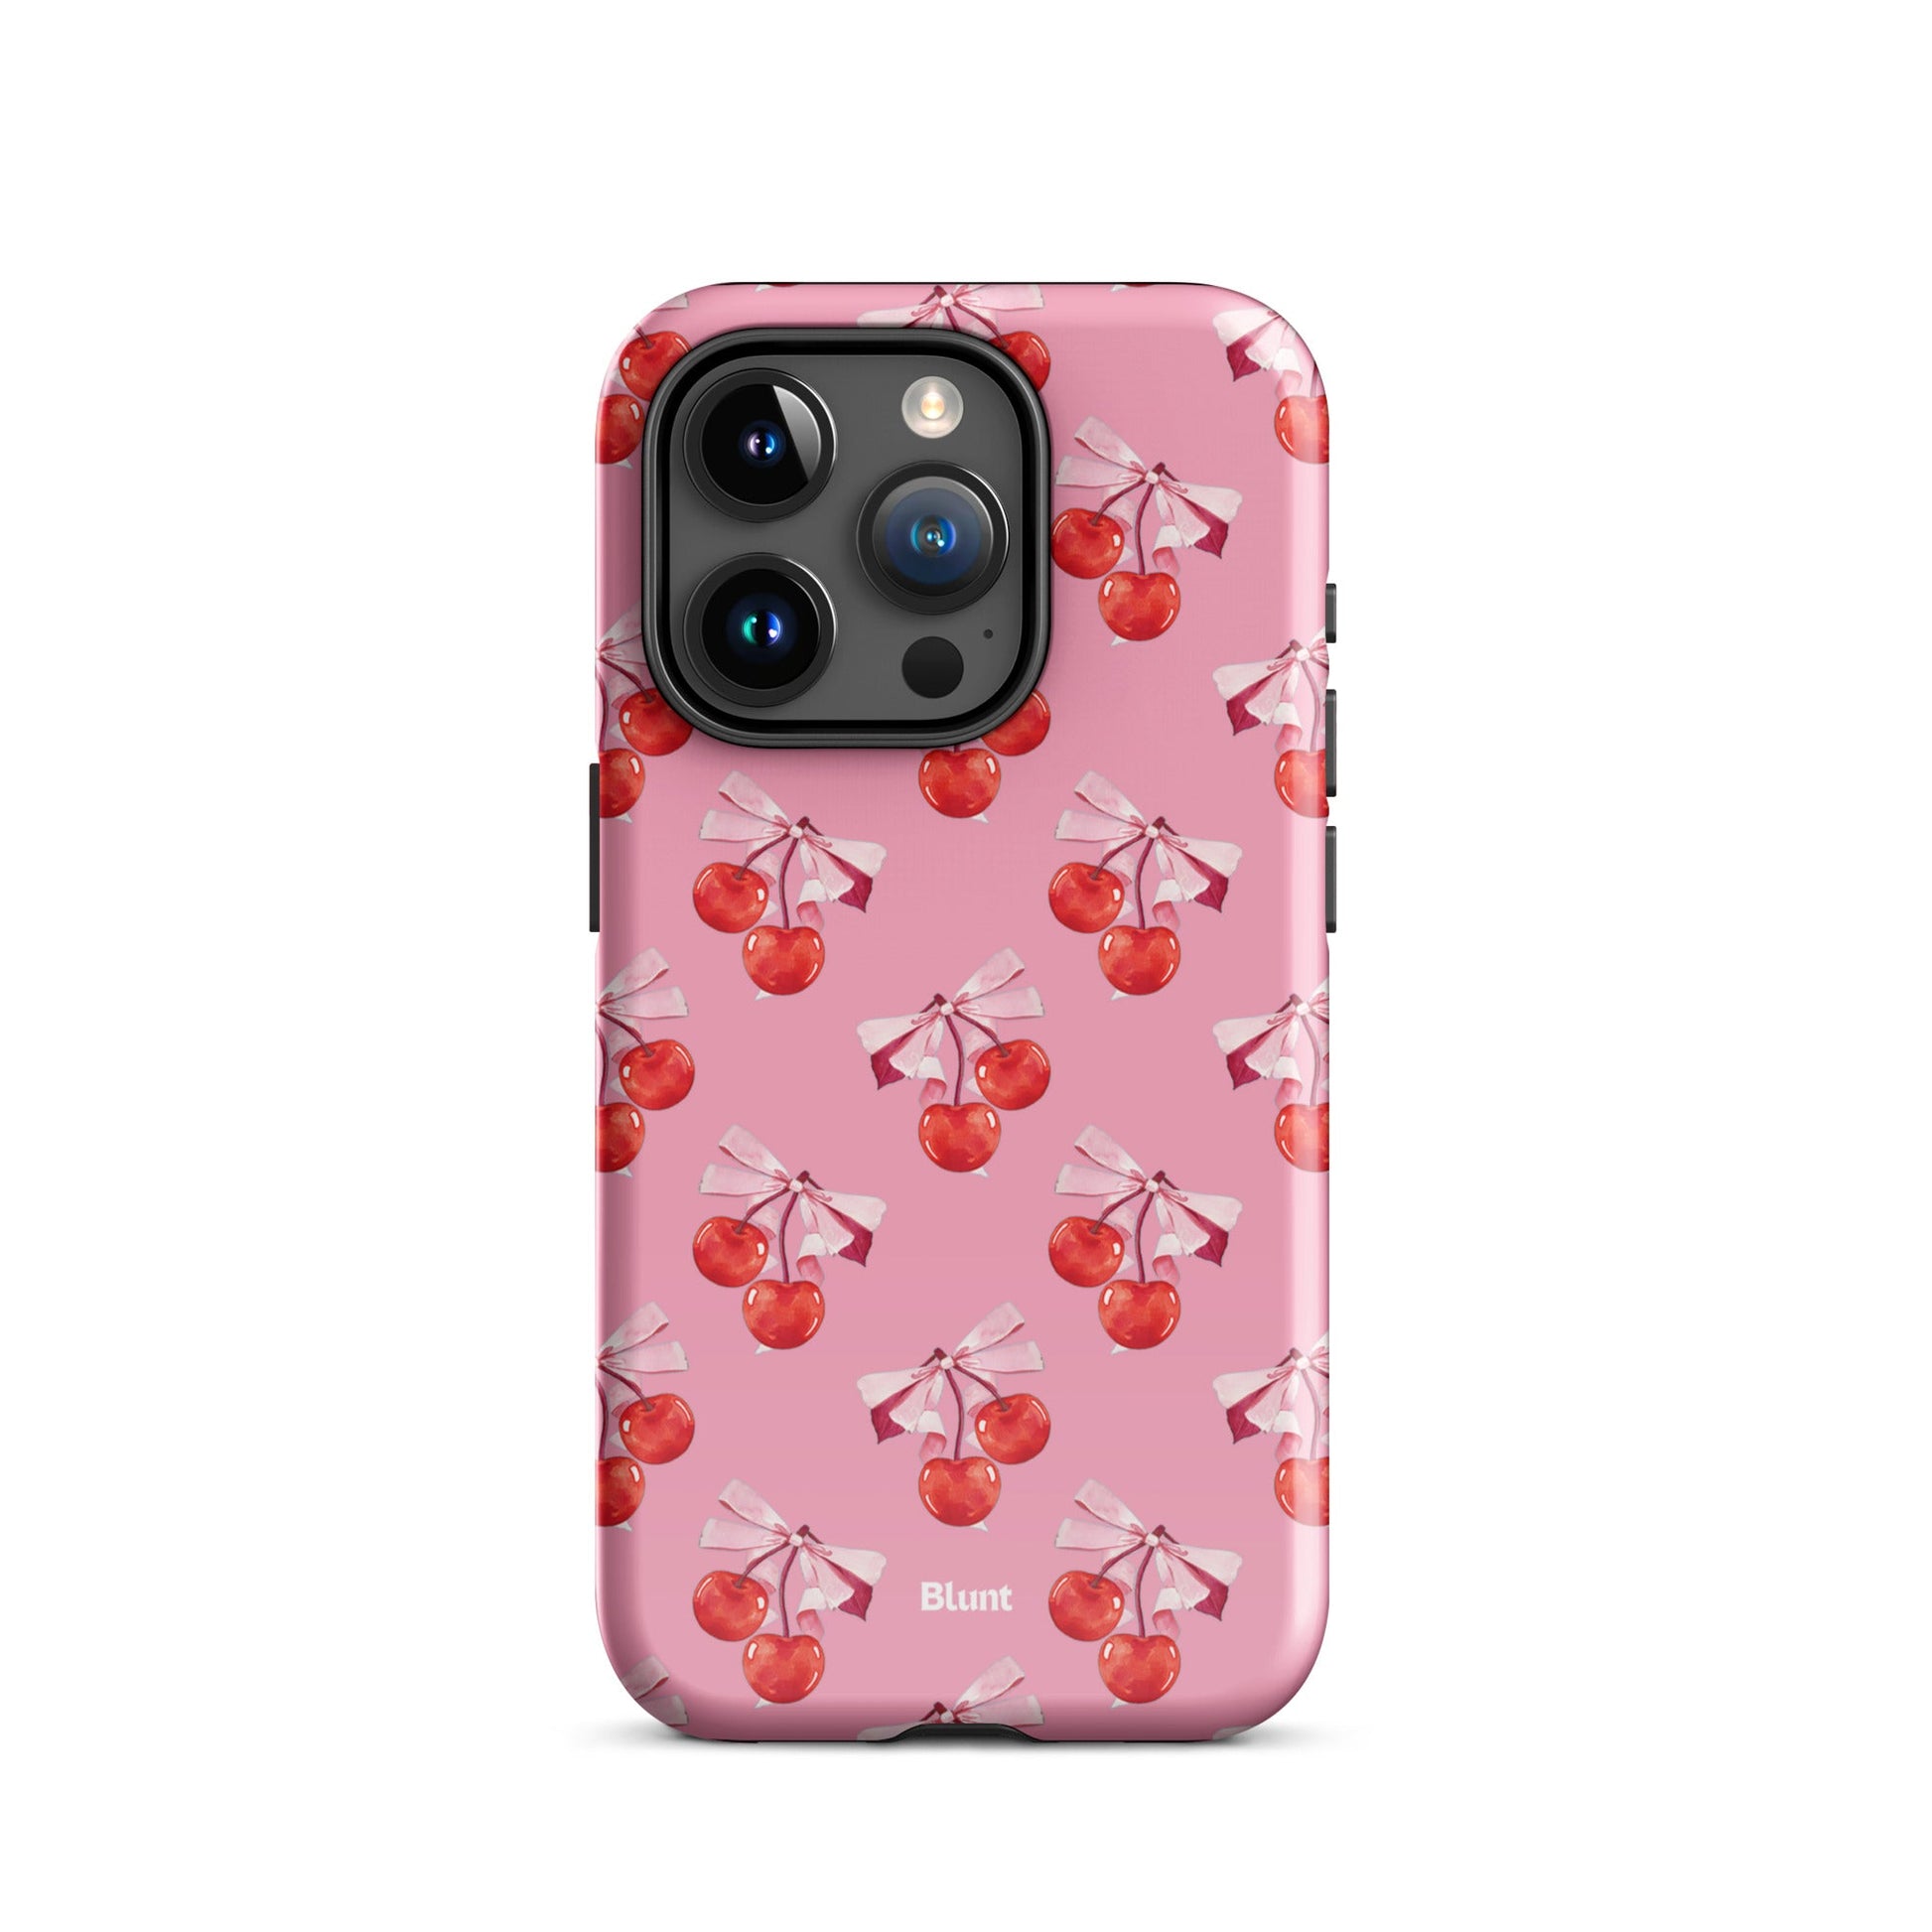 Pink Cherry iPhone Case - blunt cases